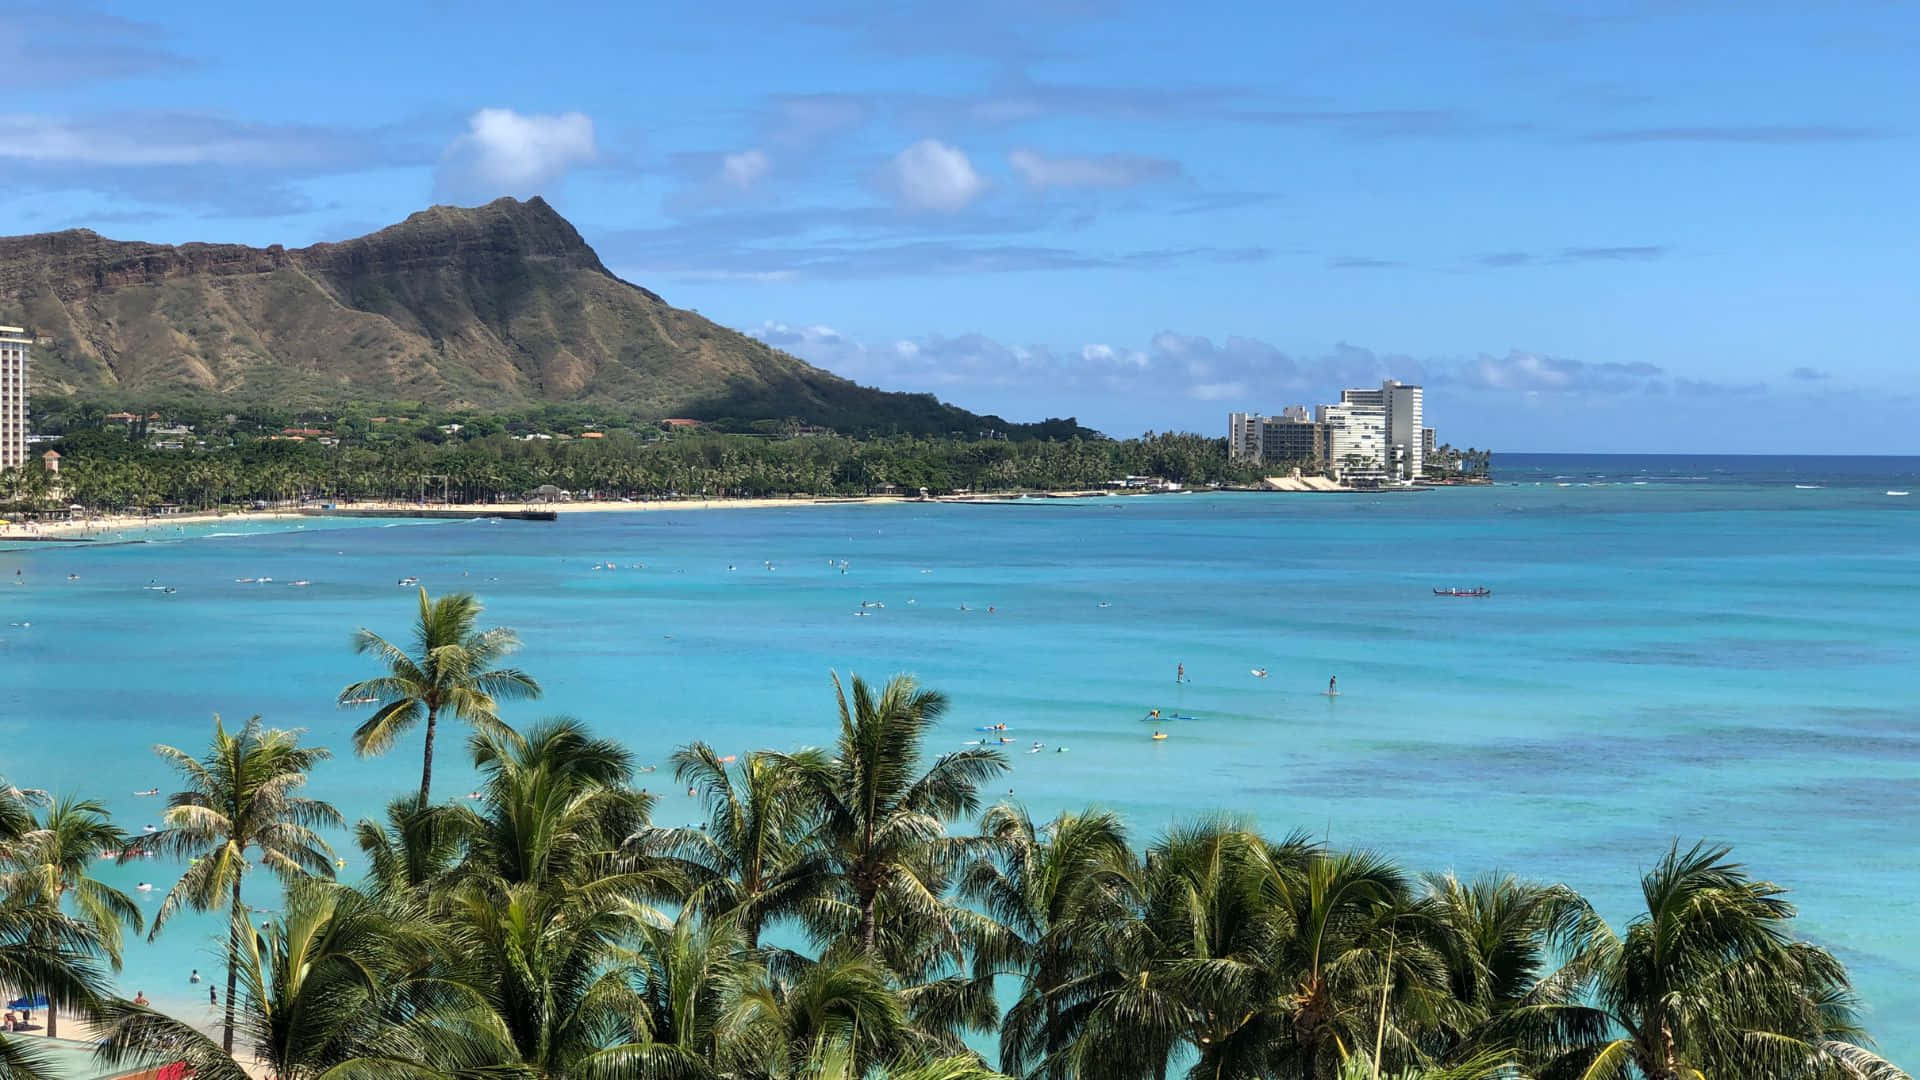 Enjoy the beautiful scenery of Hawaii.